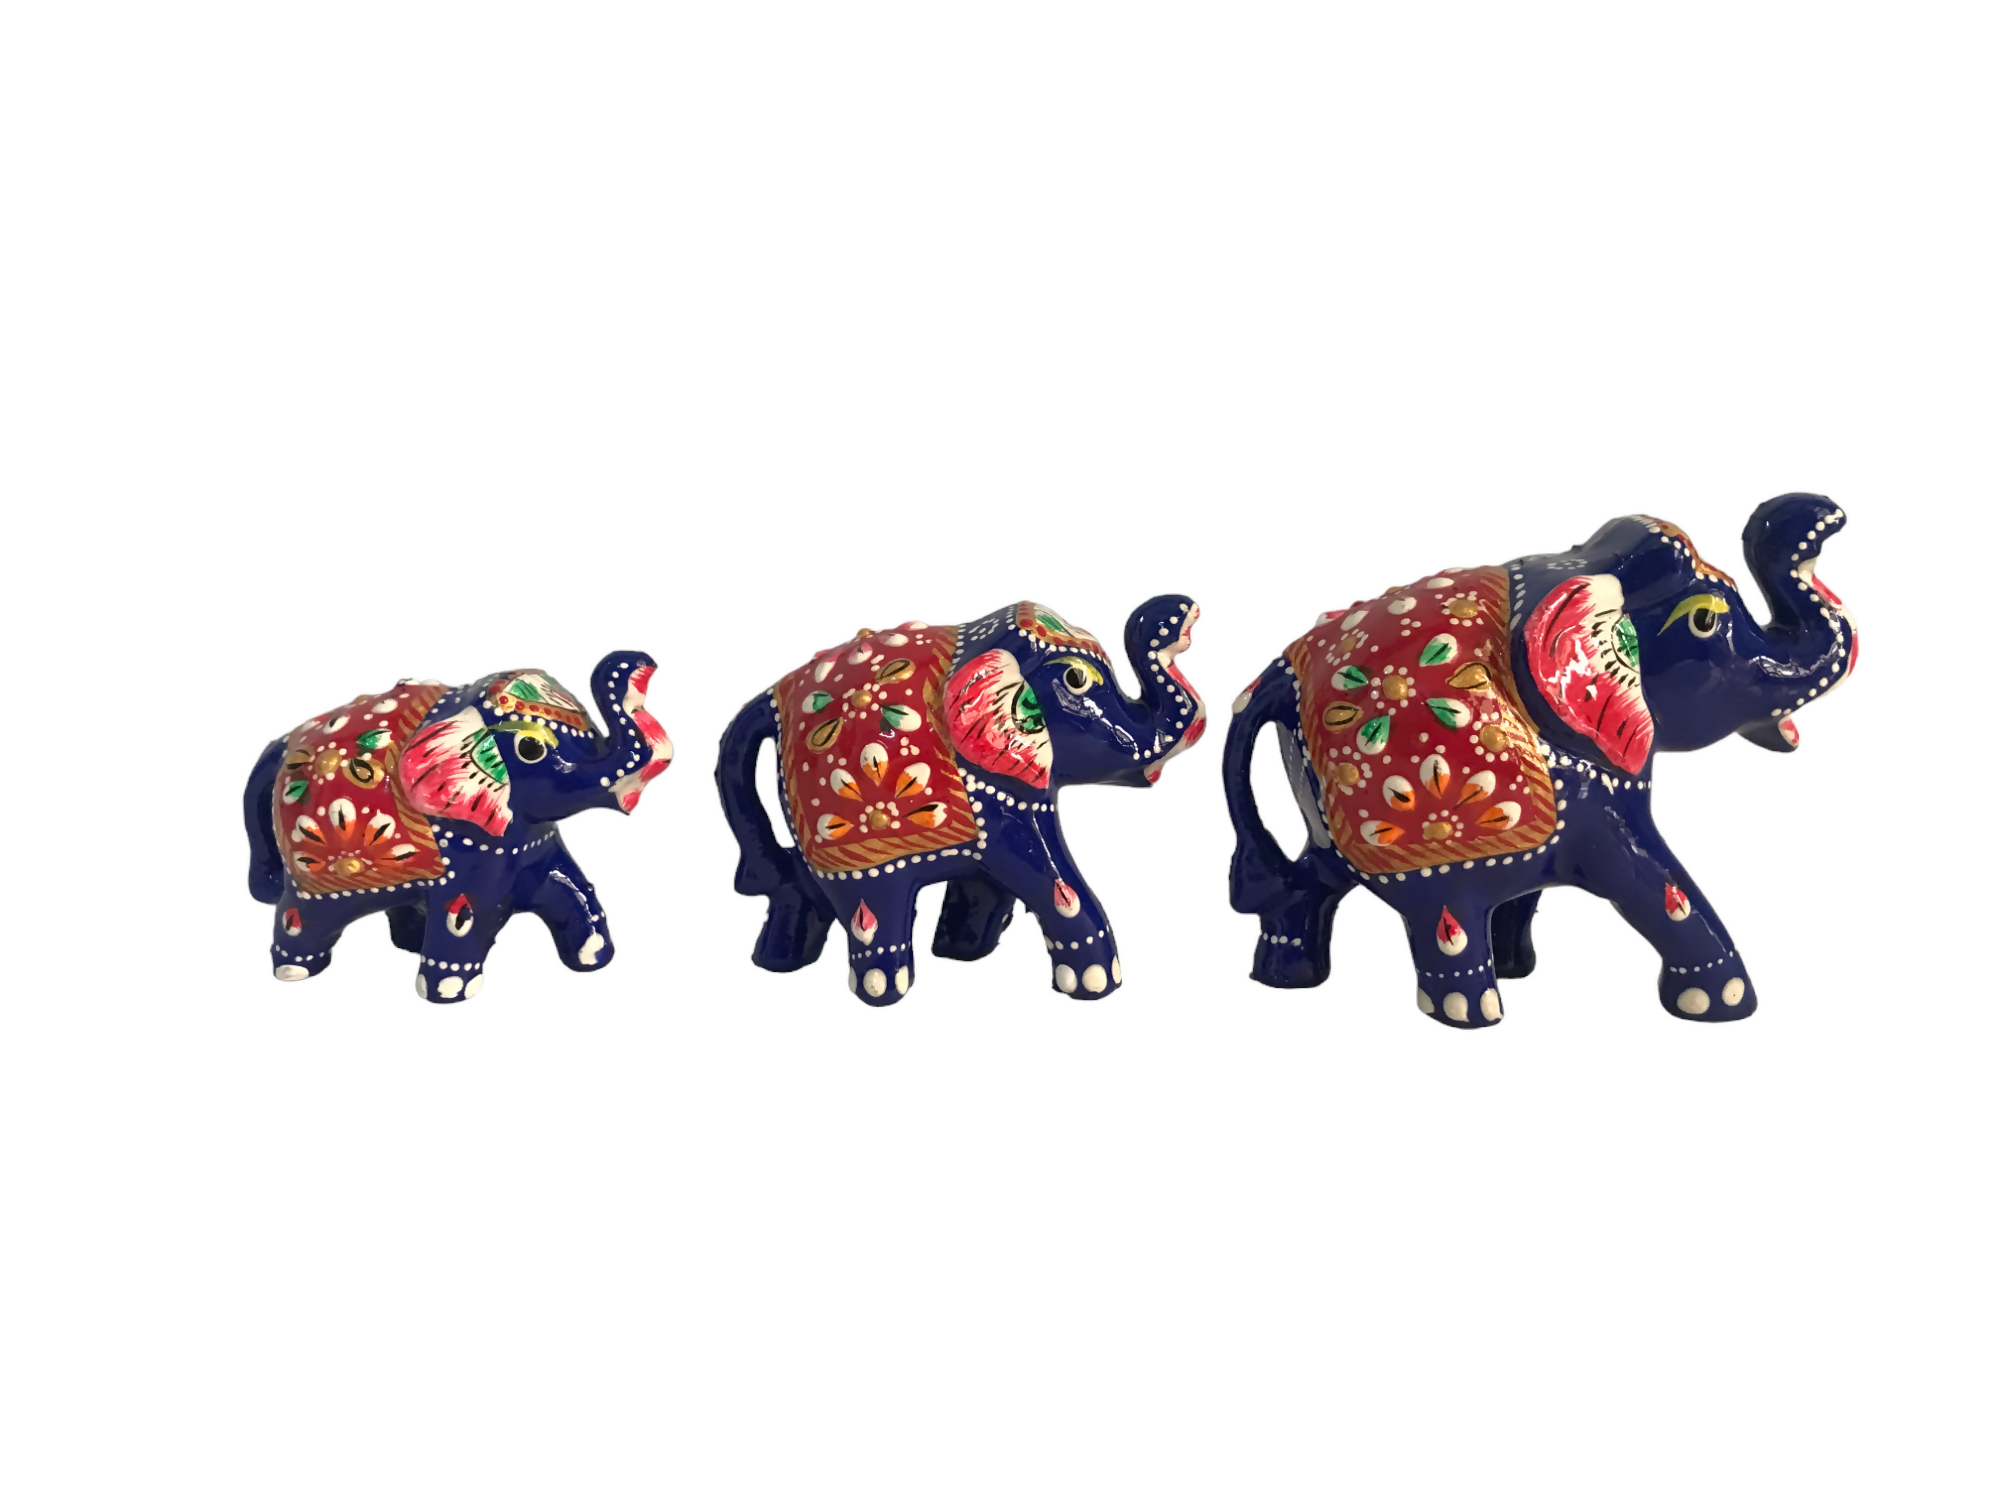 Wooden Decorative Elephants with Meenakari - Blue